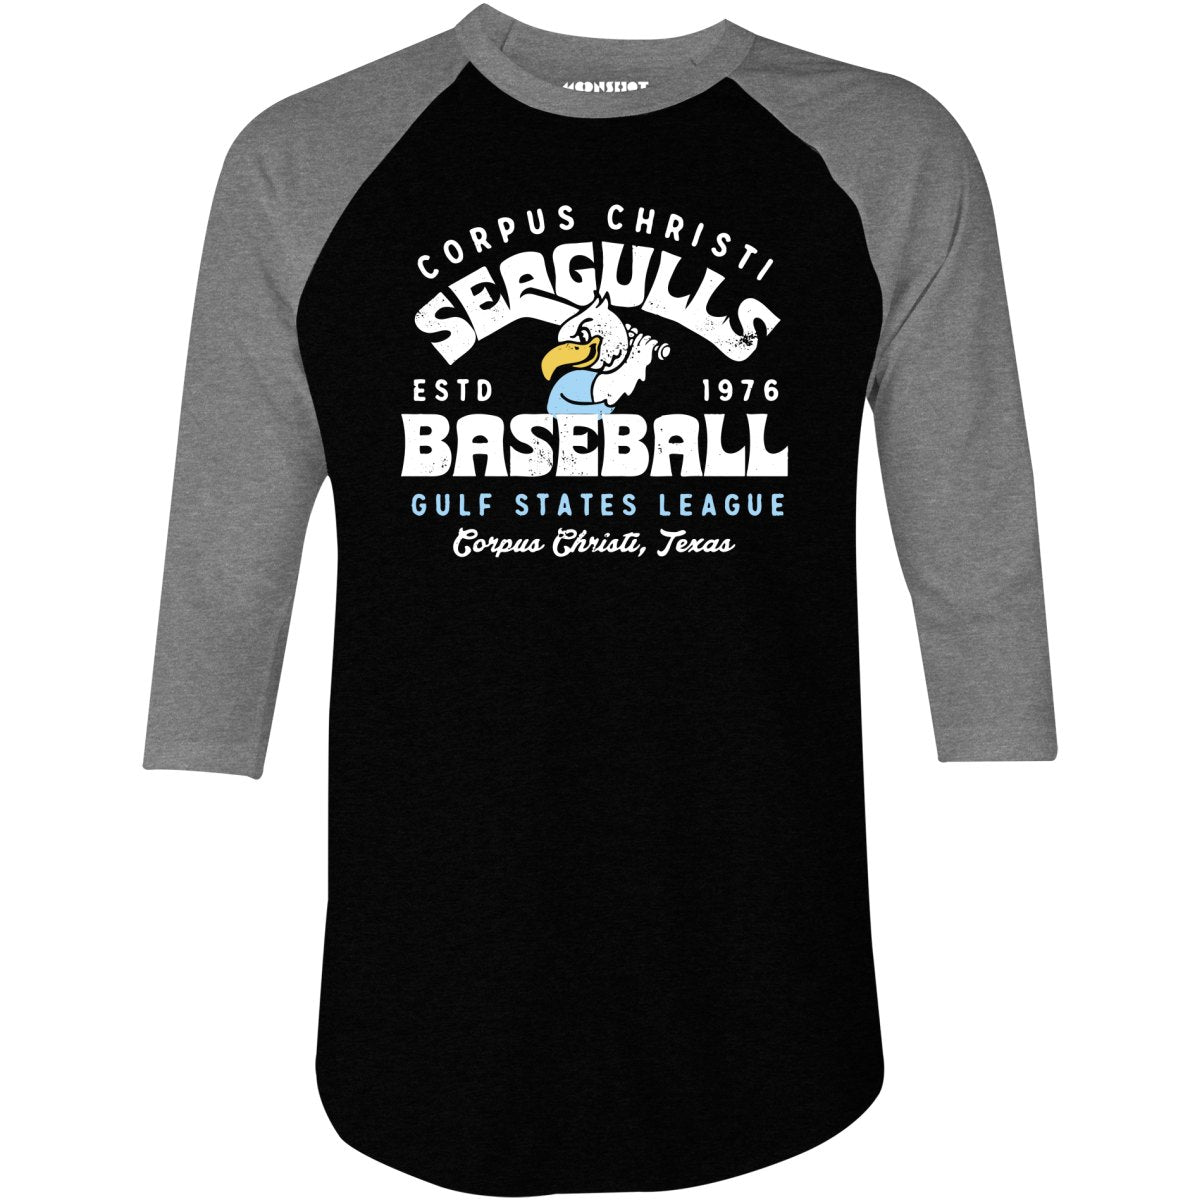 Corpus Christi Seagulls - Texas - Vintage Defunct Baseball Teams - 3/4 Sleeve Raglan T-Shirt